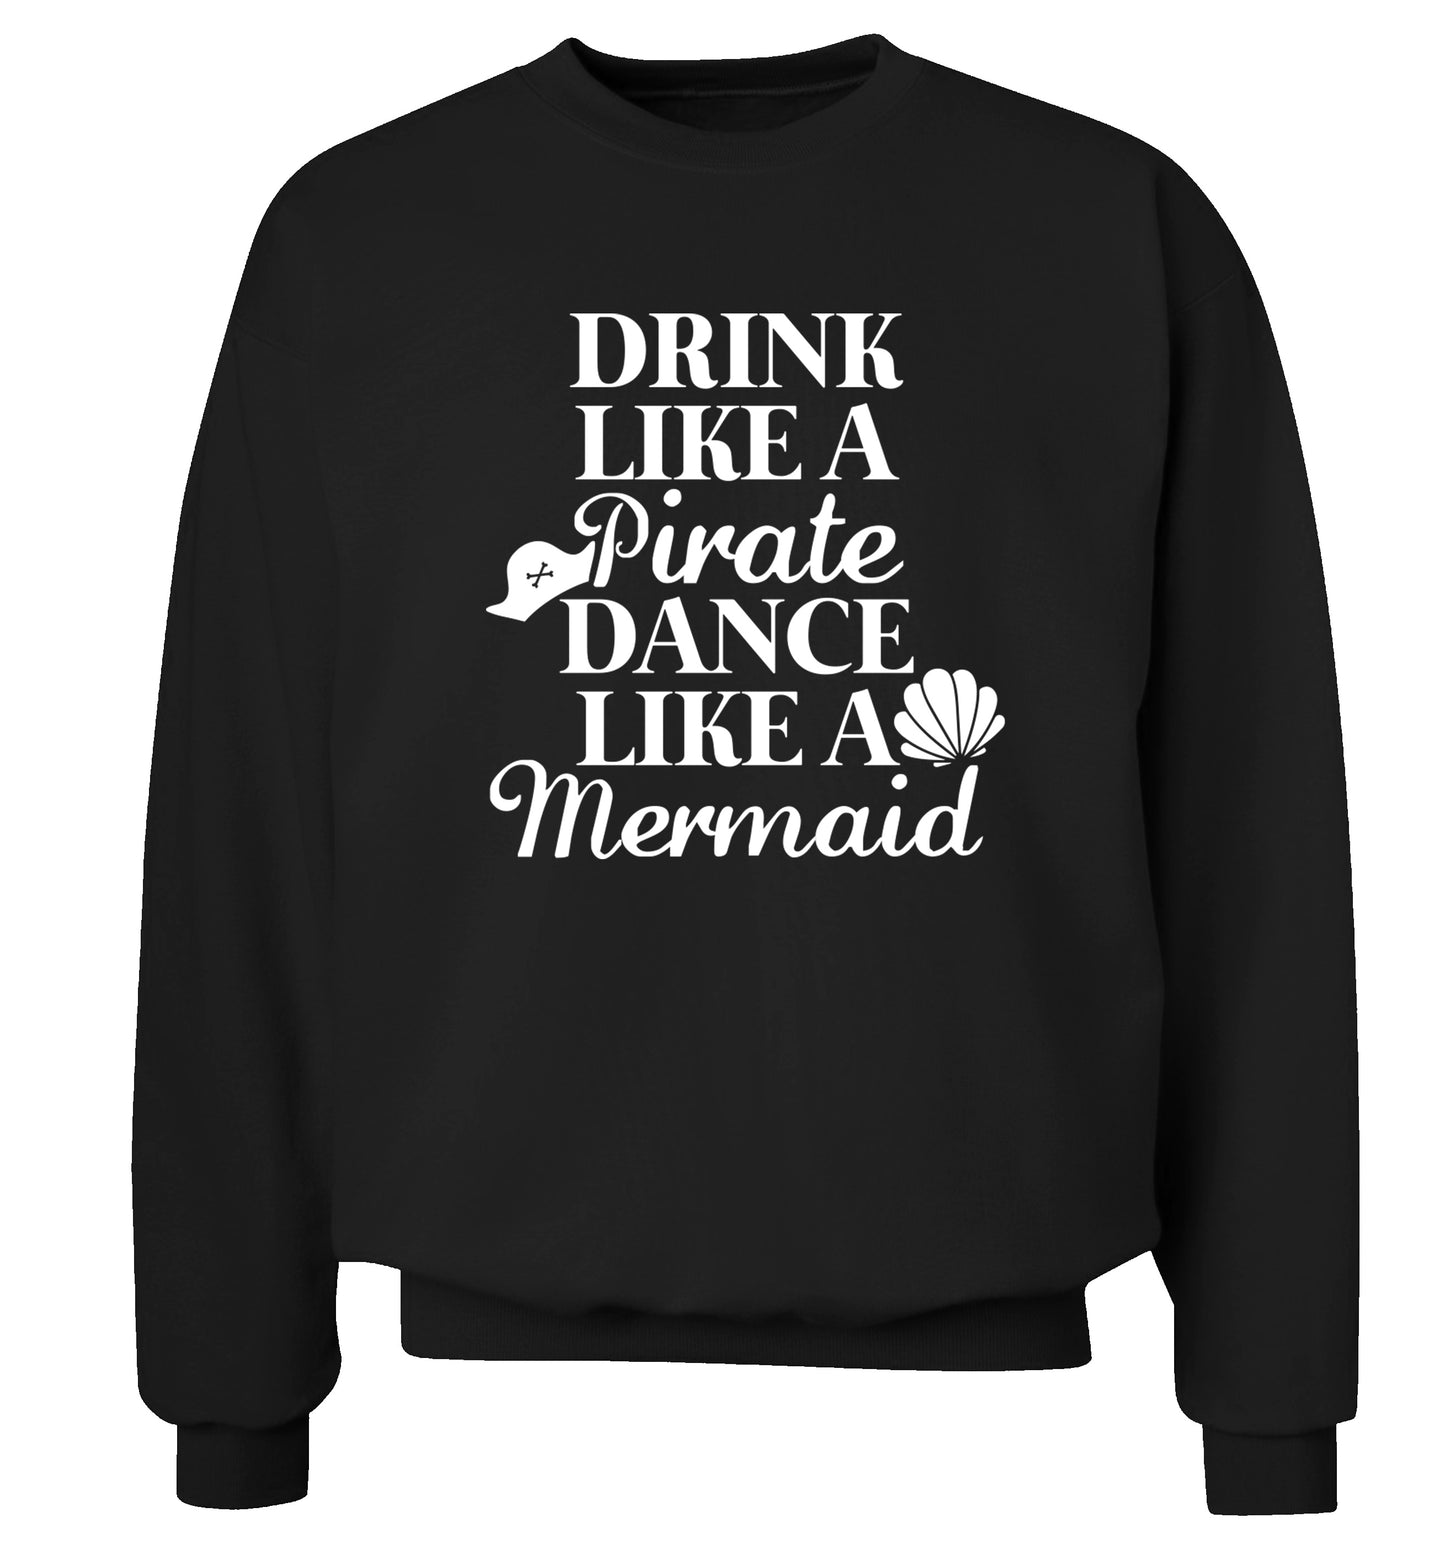 Drink like a pirate dance like a mermaid Adult's unisex black Sweater 2XL